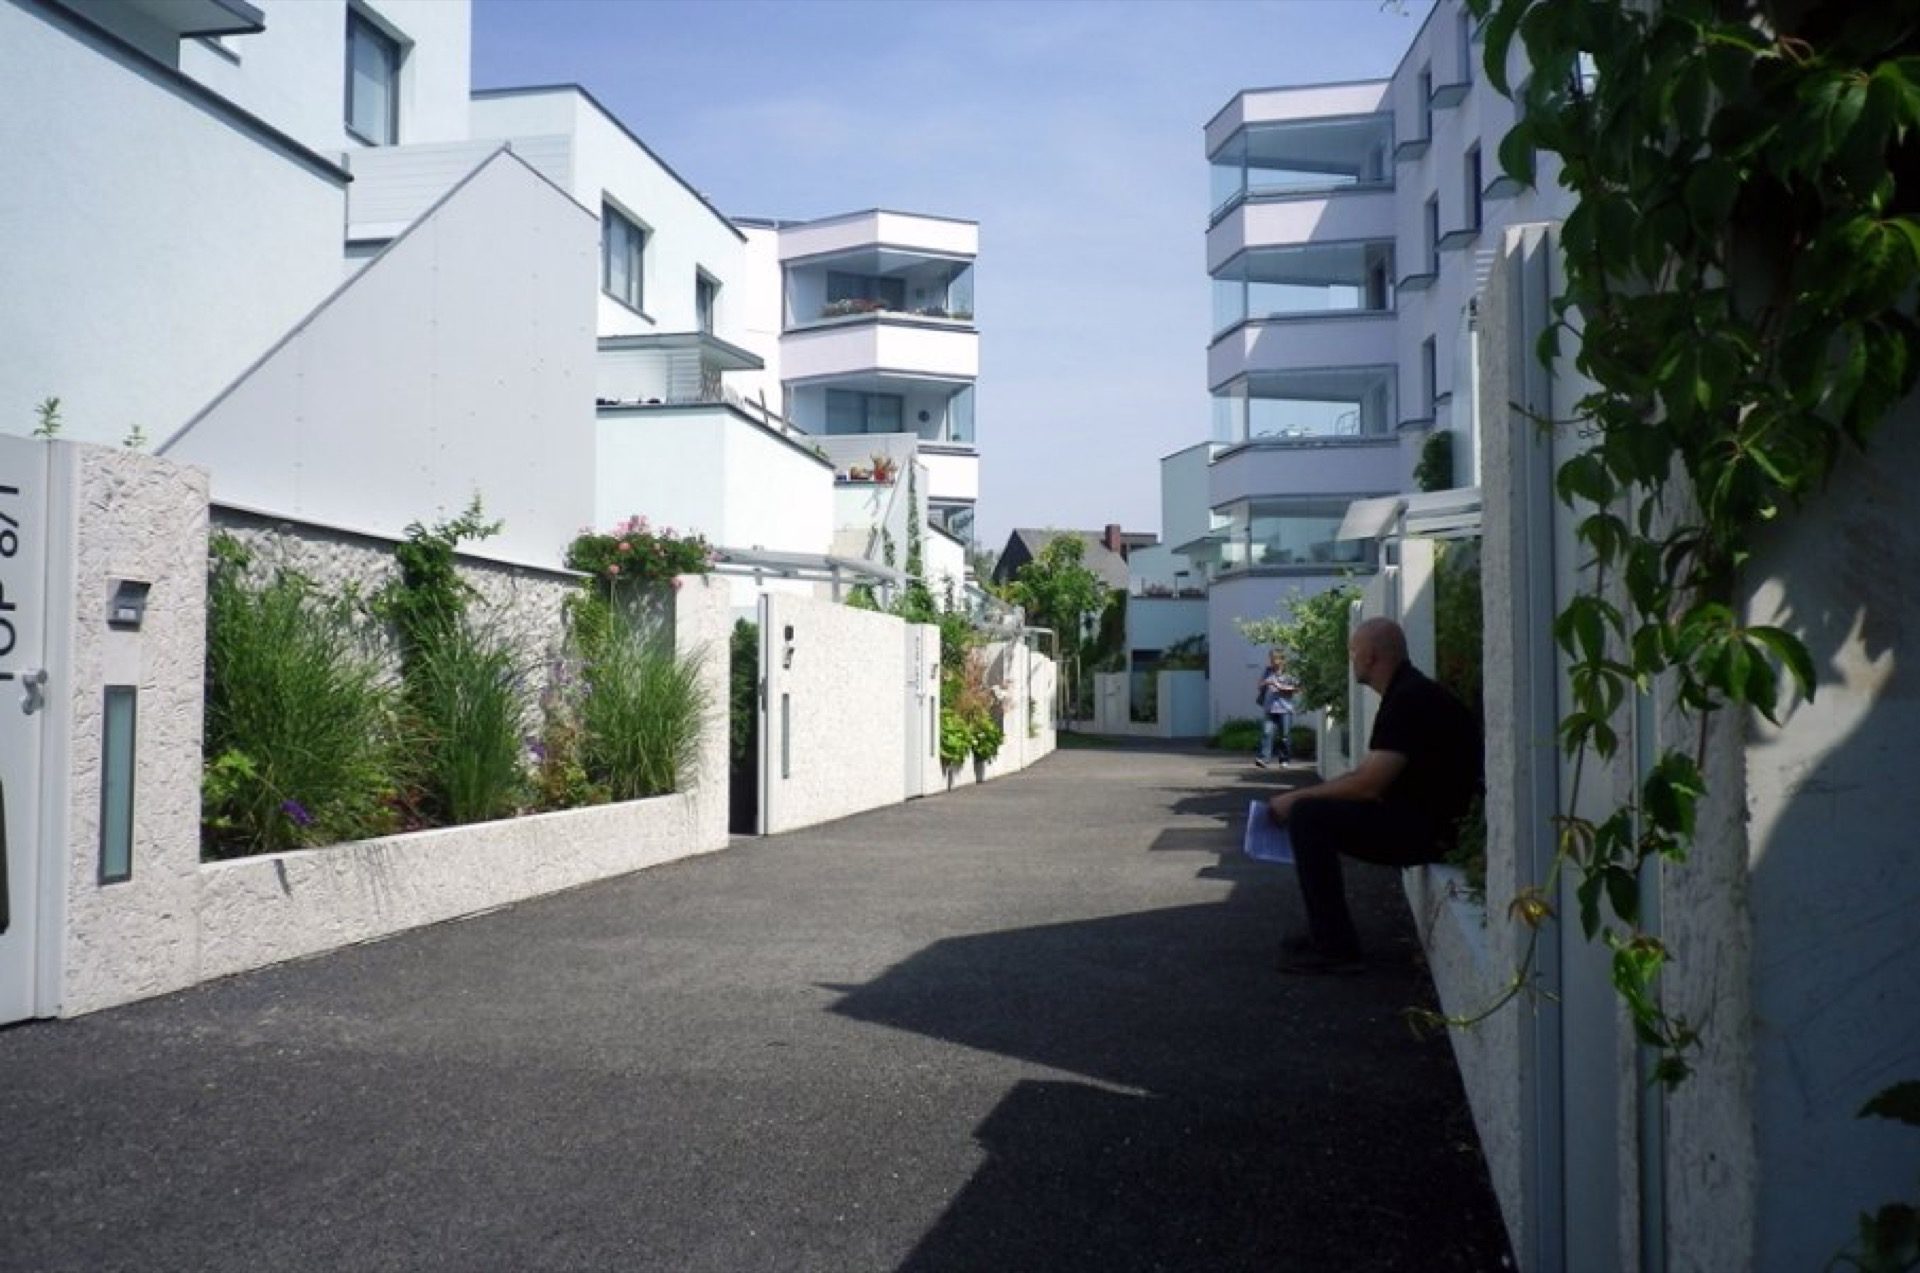 Sozialwohnbau der Gemeinde Wien … jak to dělají sousedé